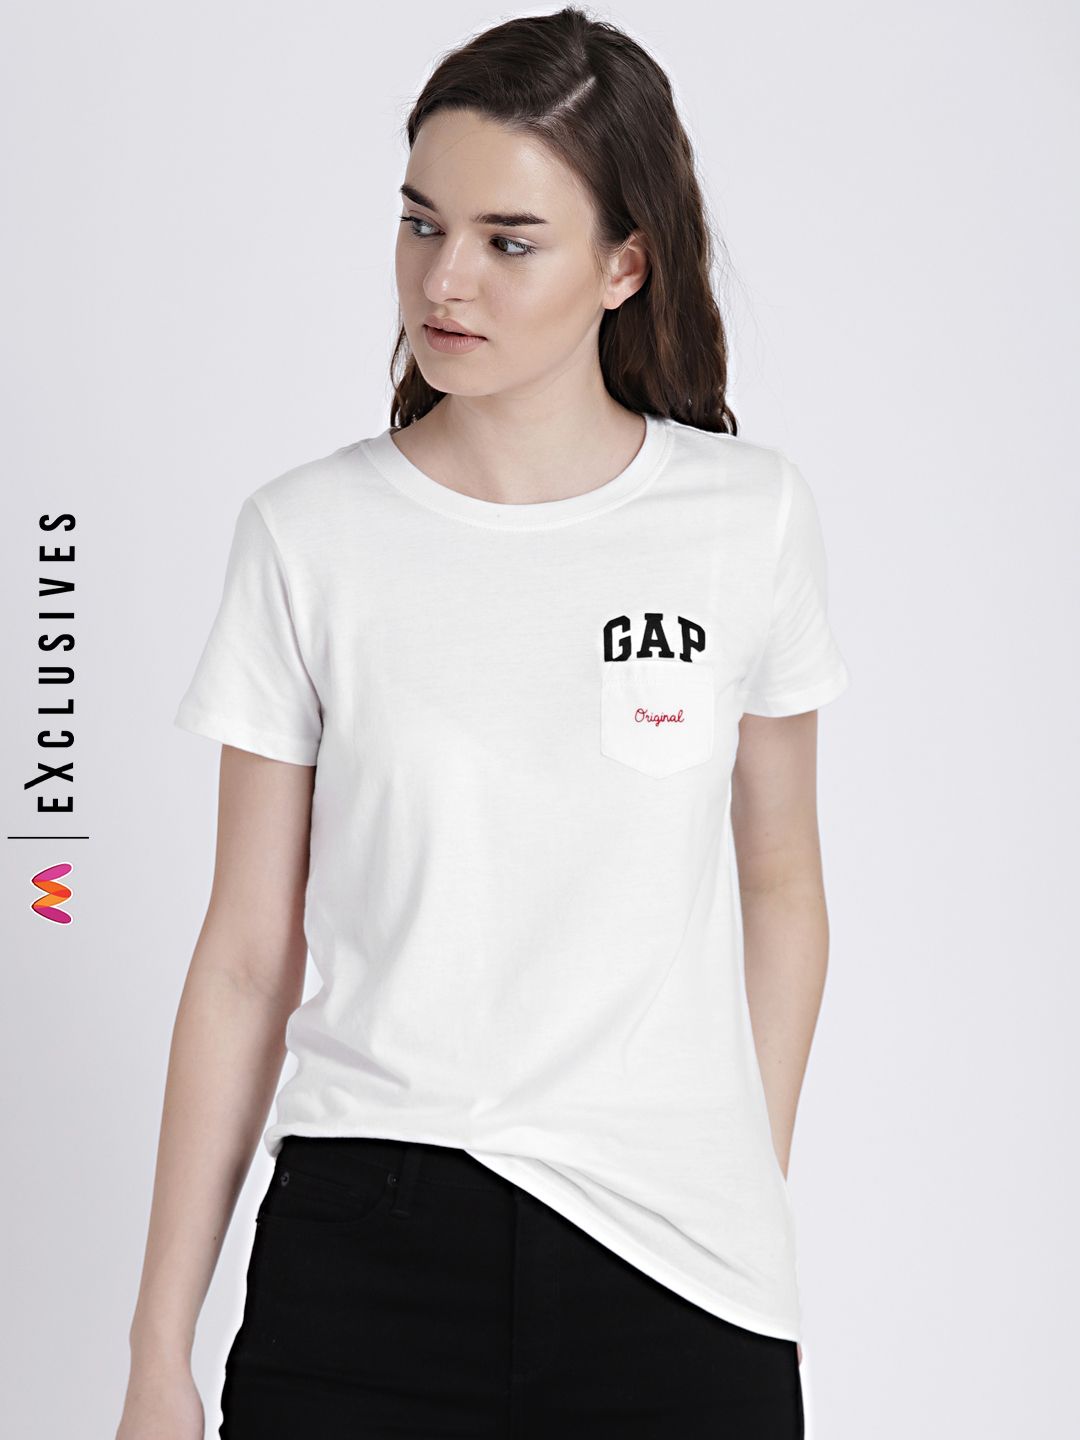 gap tshirts women